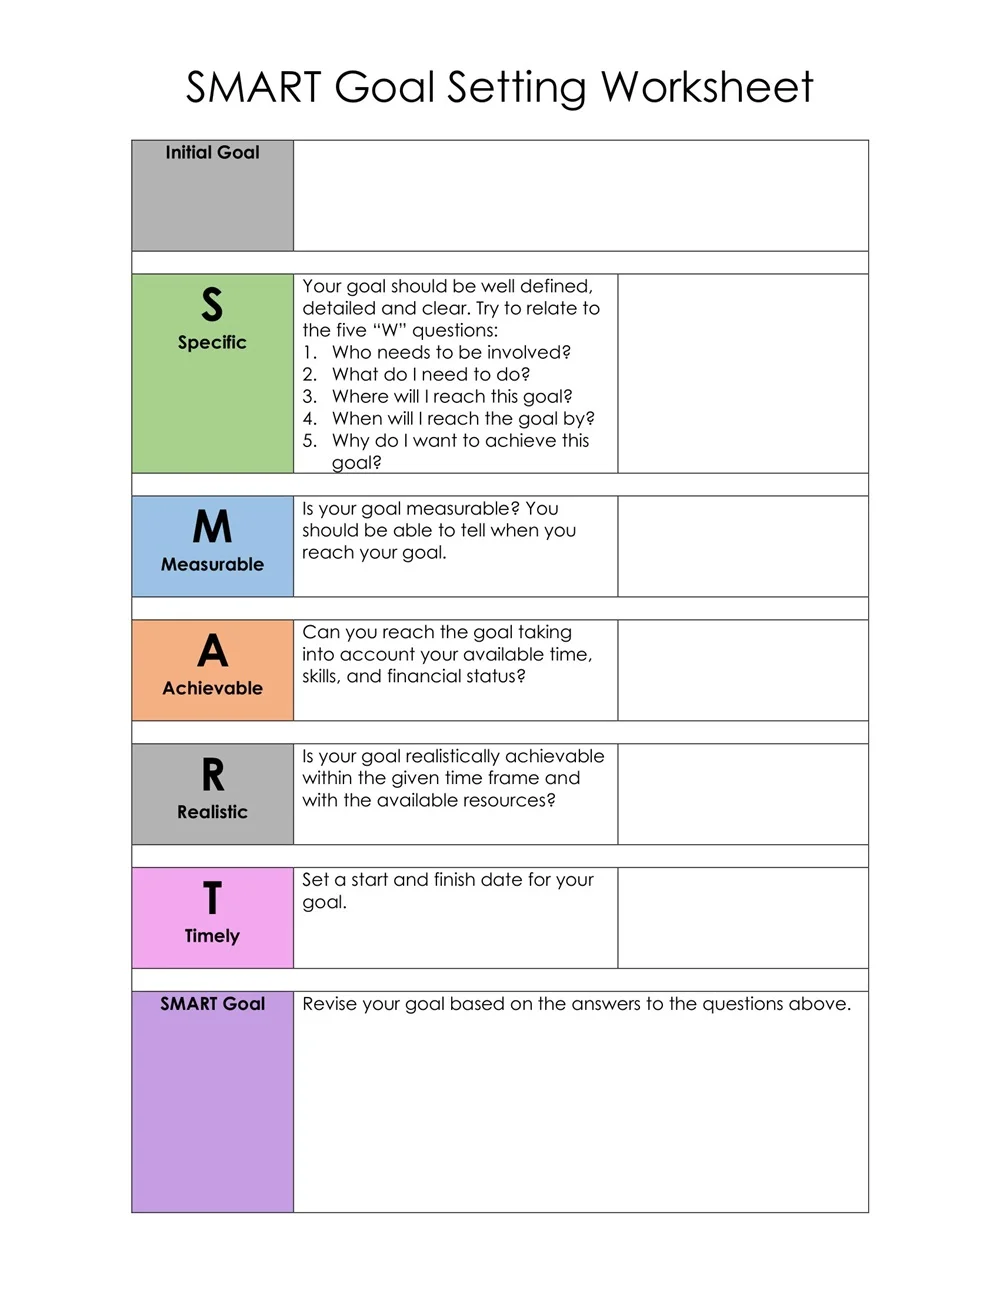 SMART Goal Setting Worksheet PDF